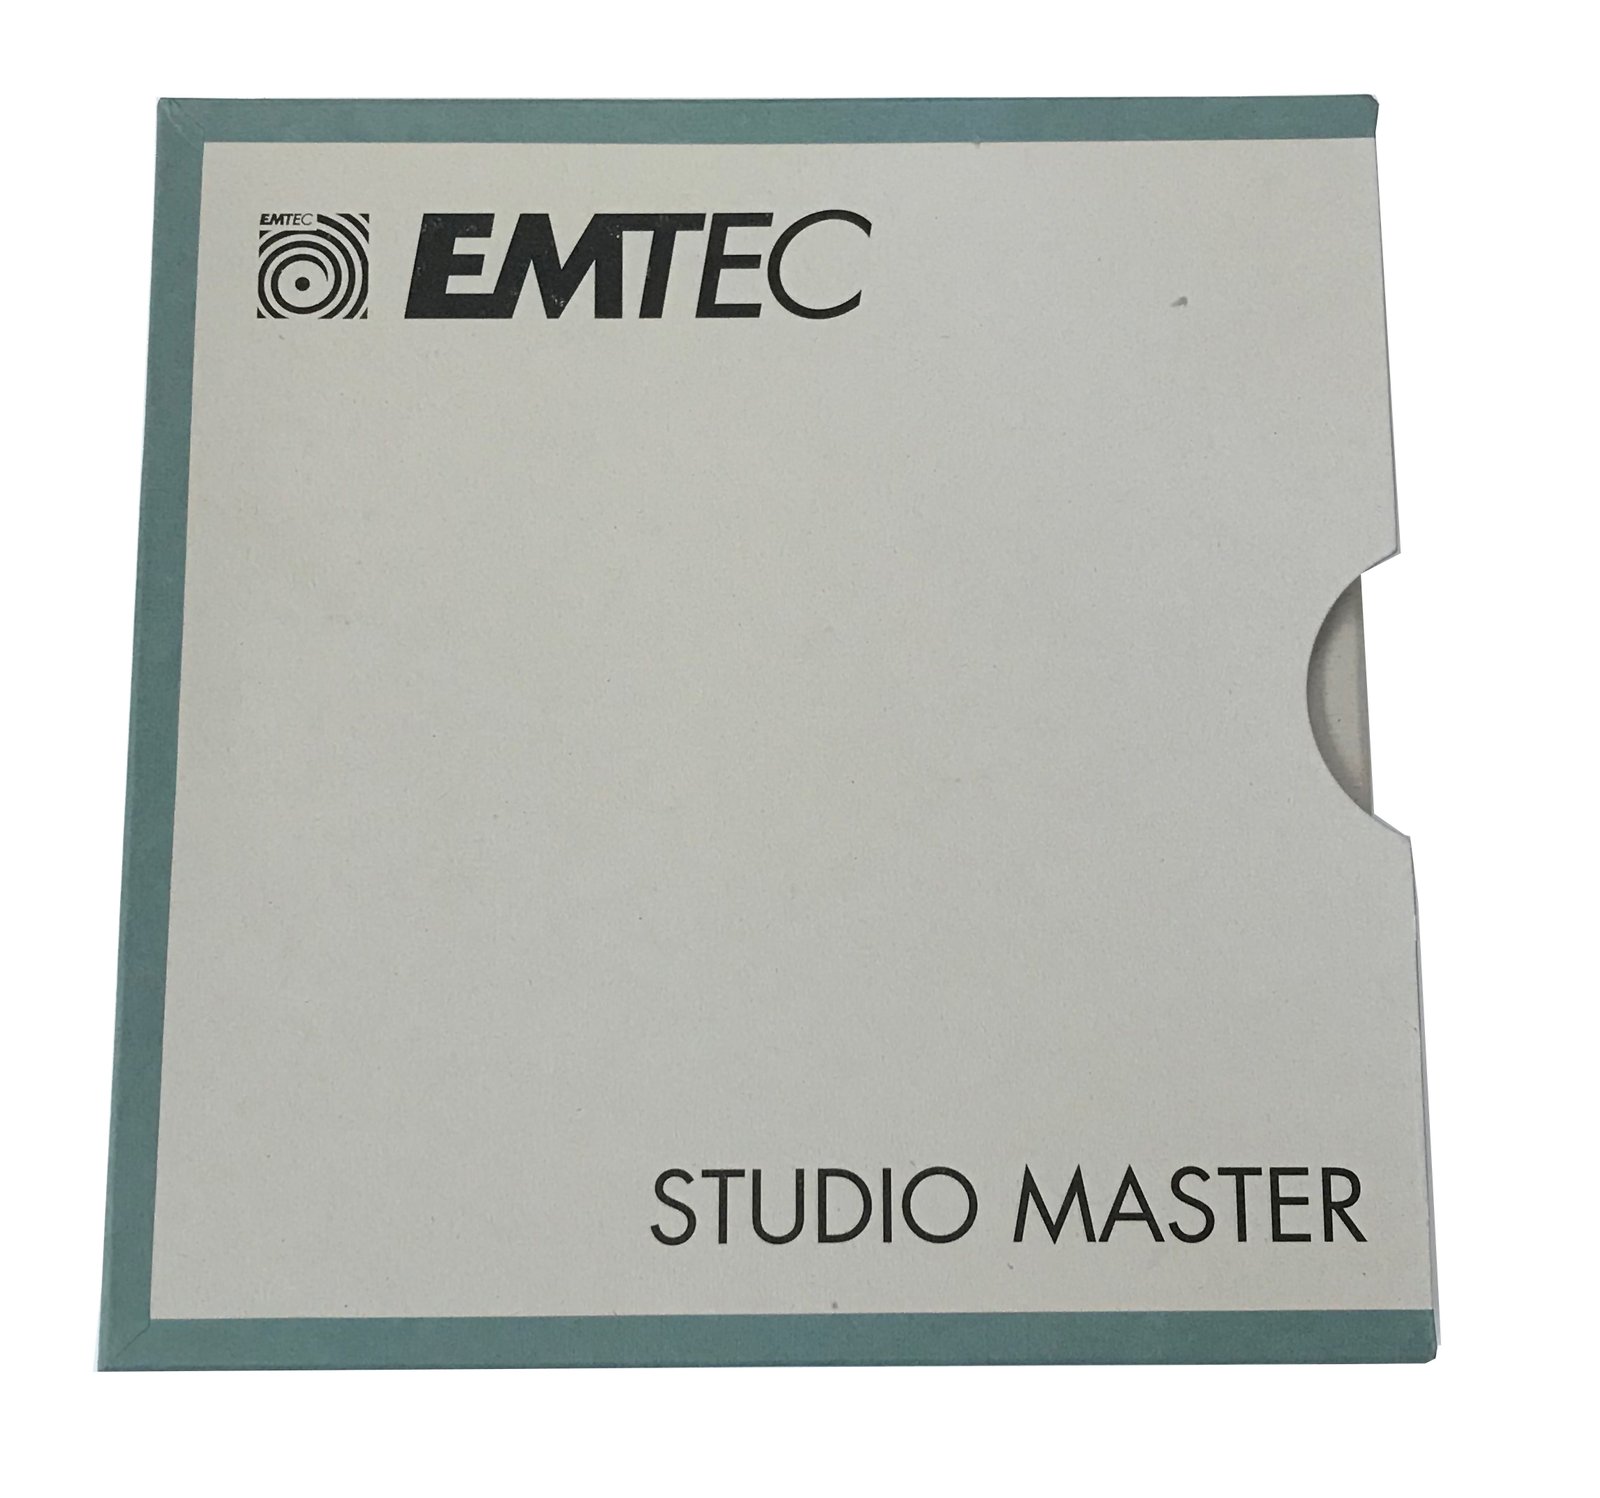 NEW RTM PYRAL BASF LPR90 1/4 3608 1100m 10.5 Pancake NAB ECO Pack RMG/EMTEC Studio Mastering Tape R38530